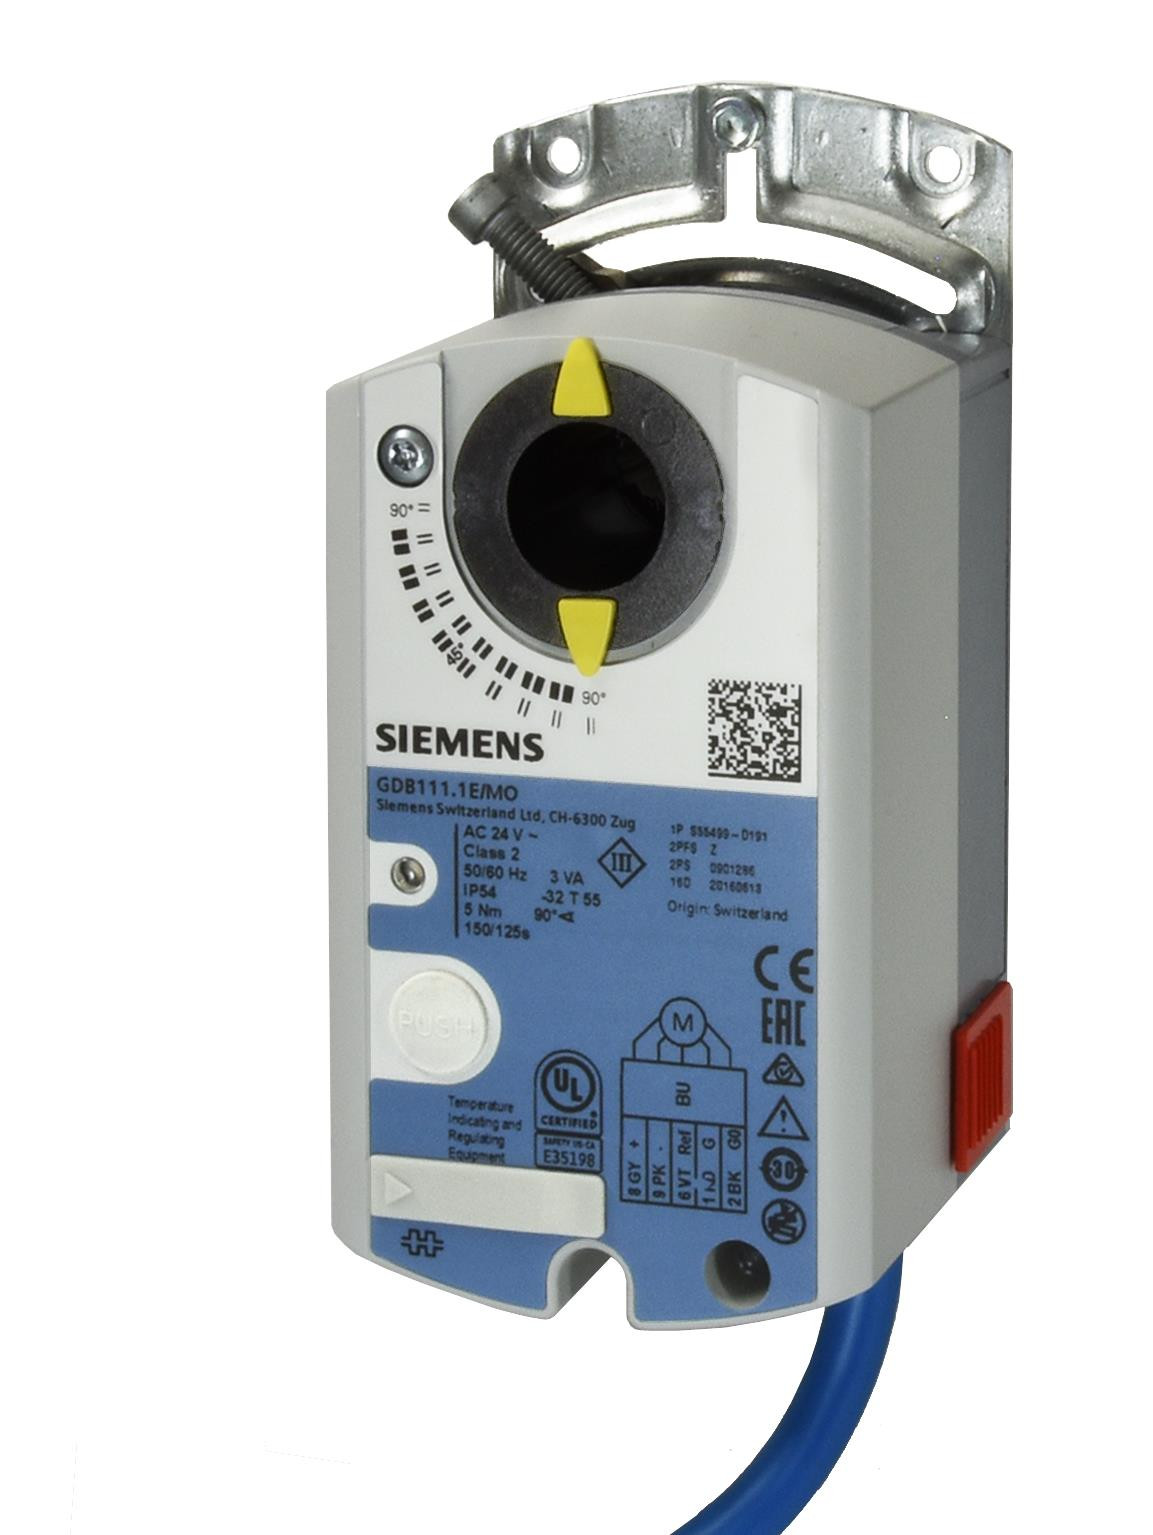 Siemens Luftklappen-Drehantrieb, AC 24 V, 5 Nm mit Modbus RTU-Kommunikation GDB111.1E/MO